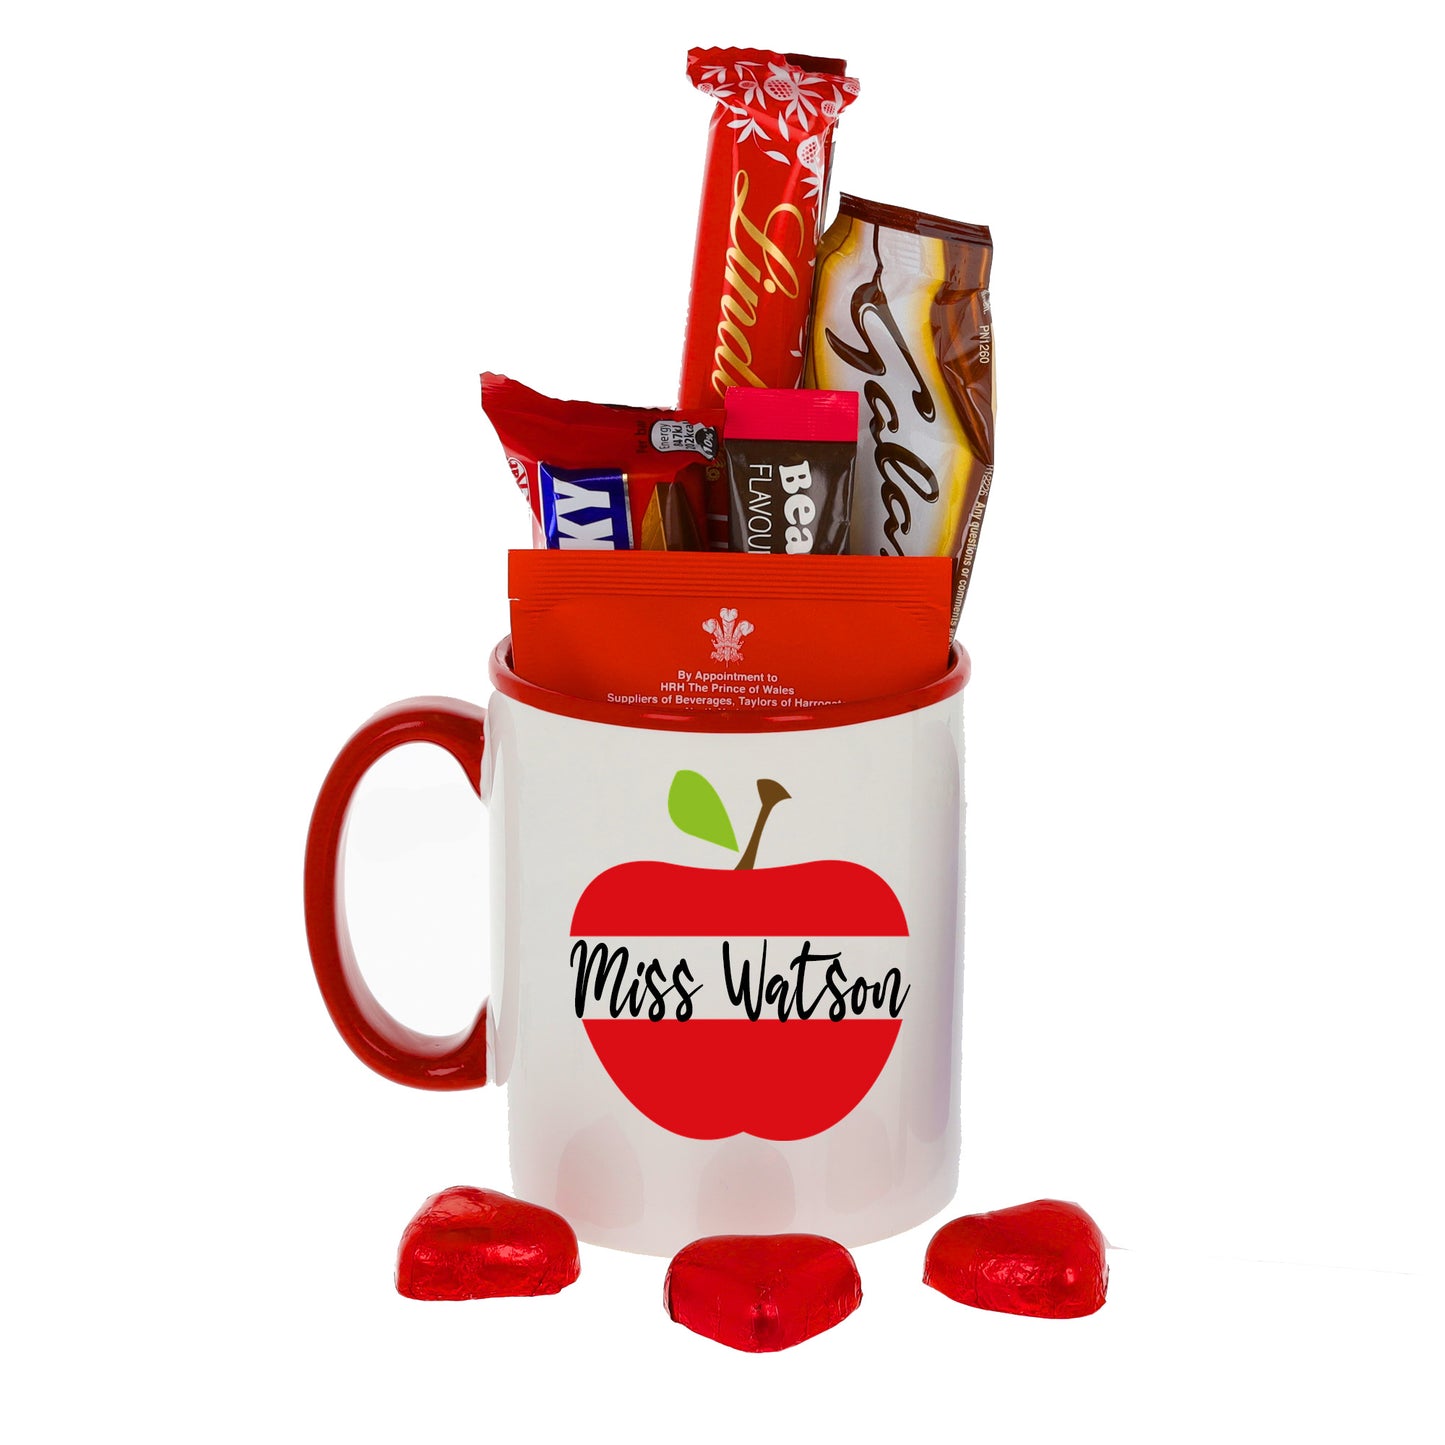 Personalised Teacher Thank you Gift Filled Mug & Coaster Set Red  - Always Looking Good - Filled Mug  